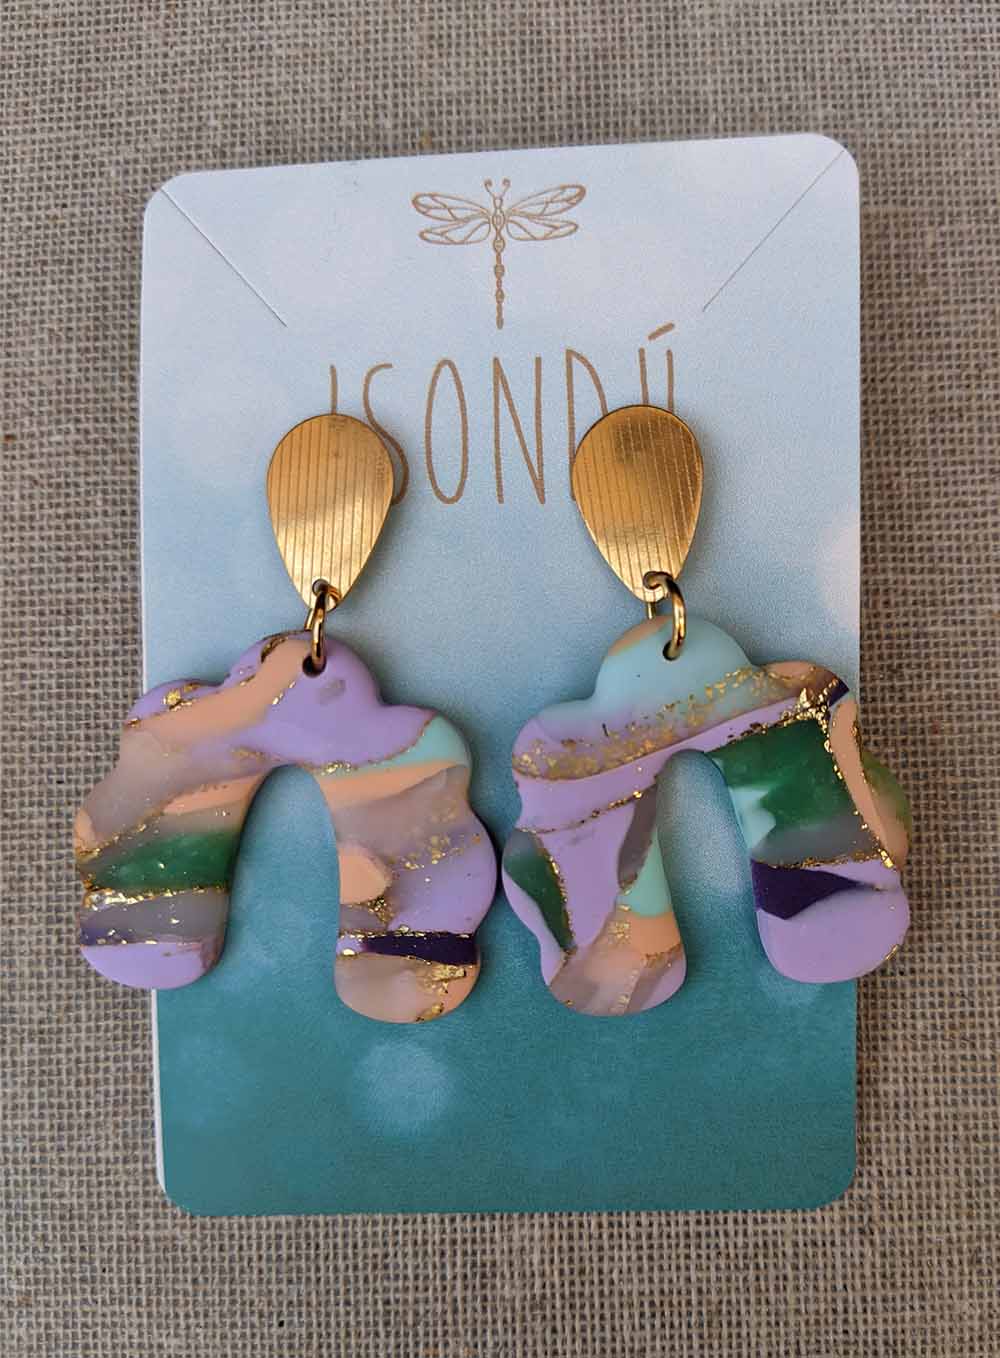 Exclusive Isondú Sunrise Handmade Earrings